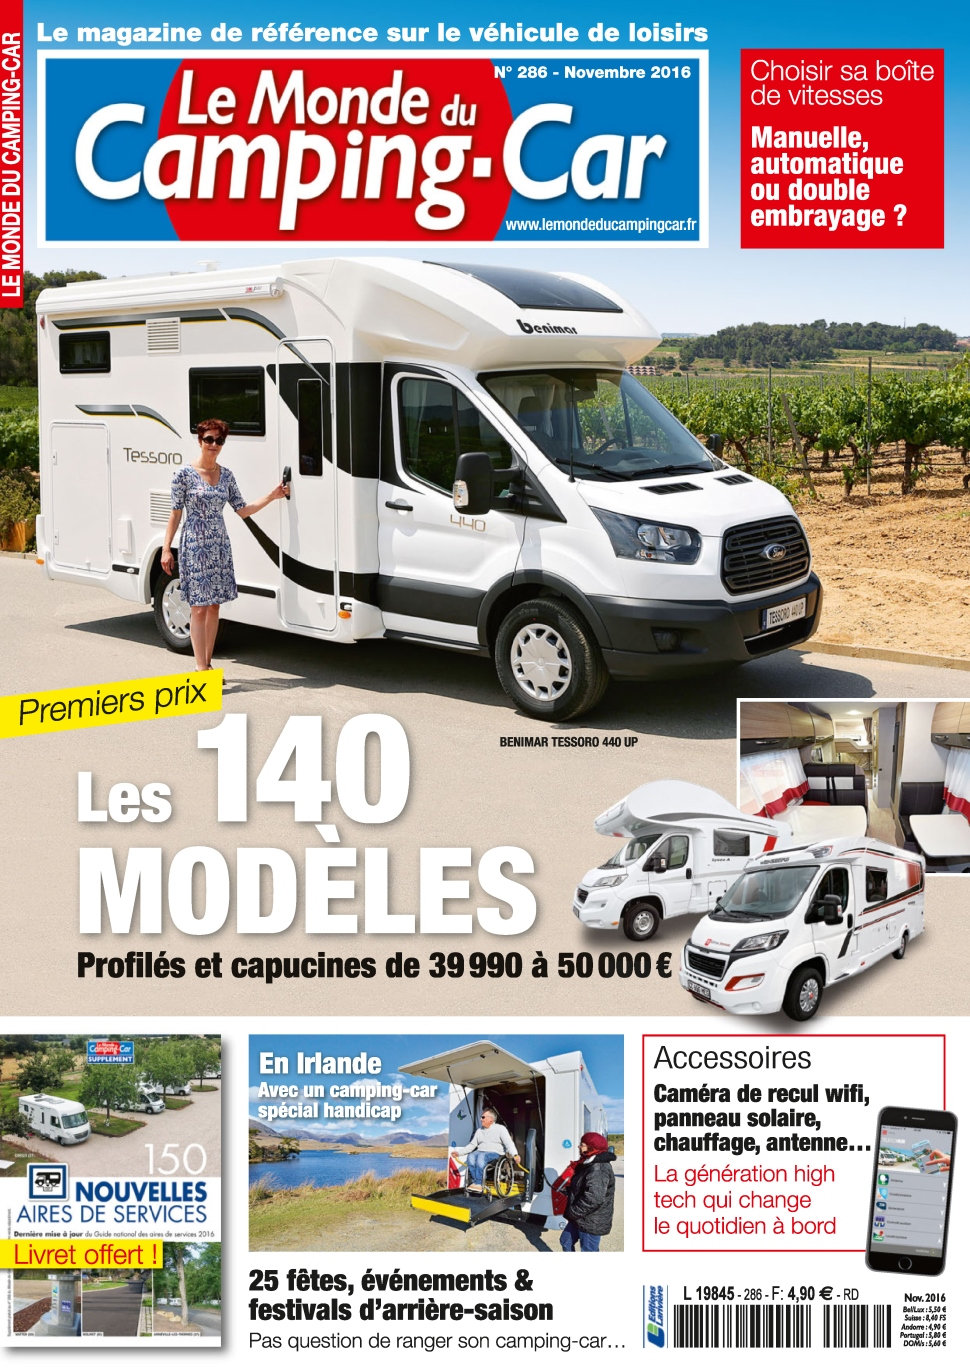 Le Monde du Camping-Car N°286 - Novembre 2016